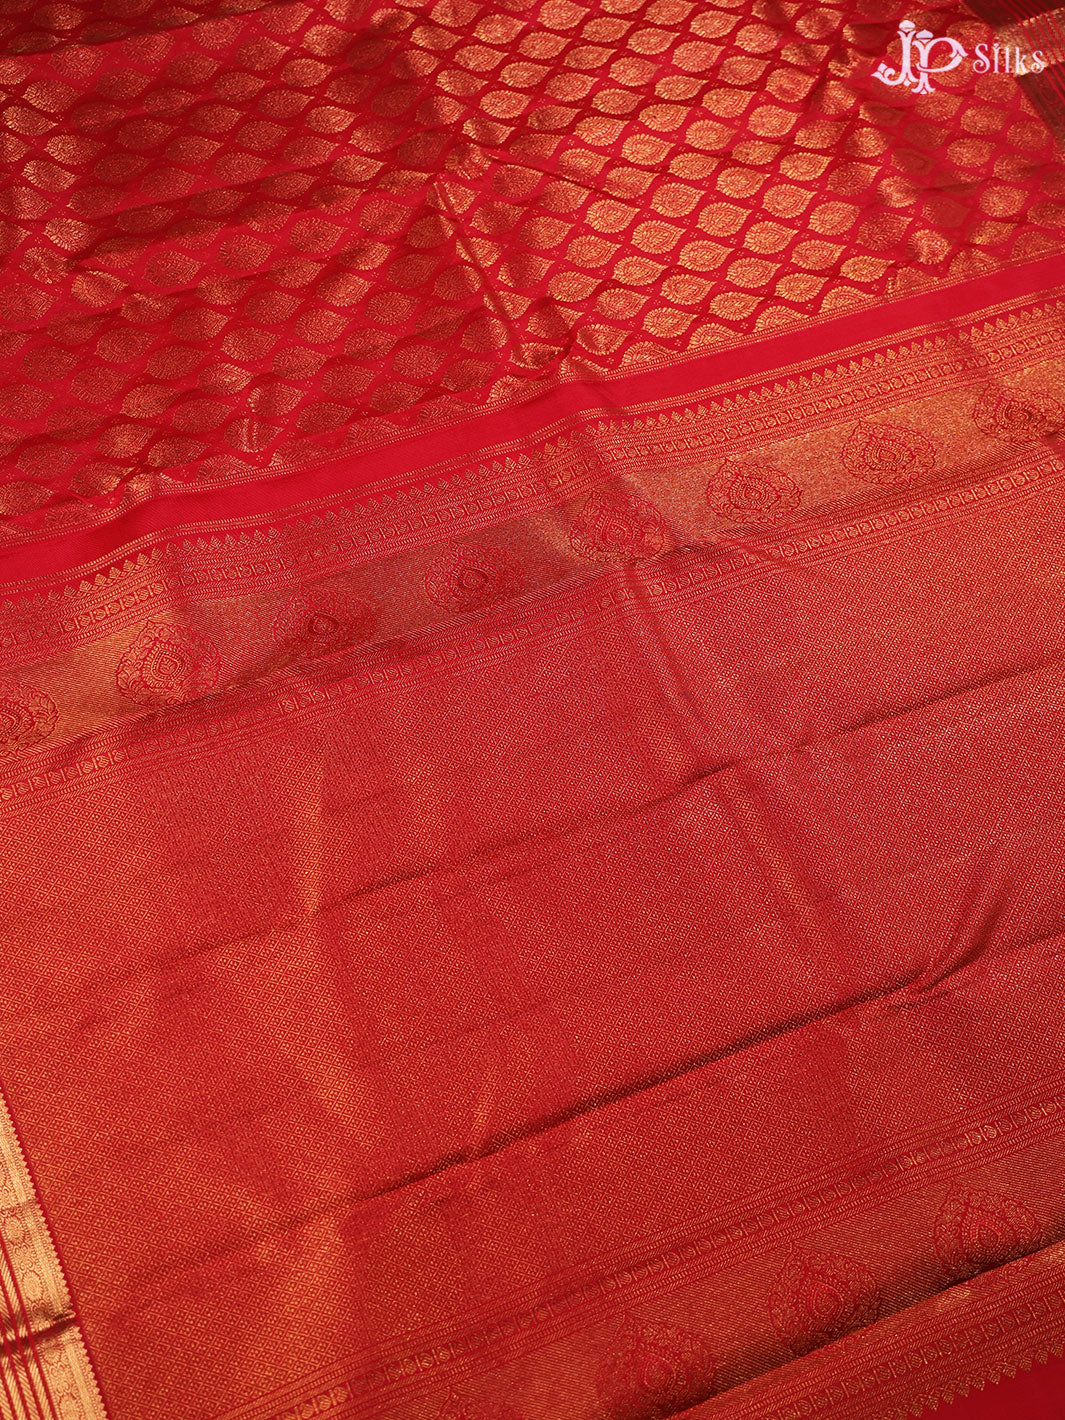 Red Kanchipuram Silk Saree - E4581 - View 4